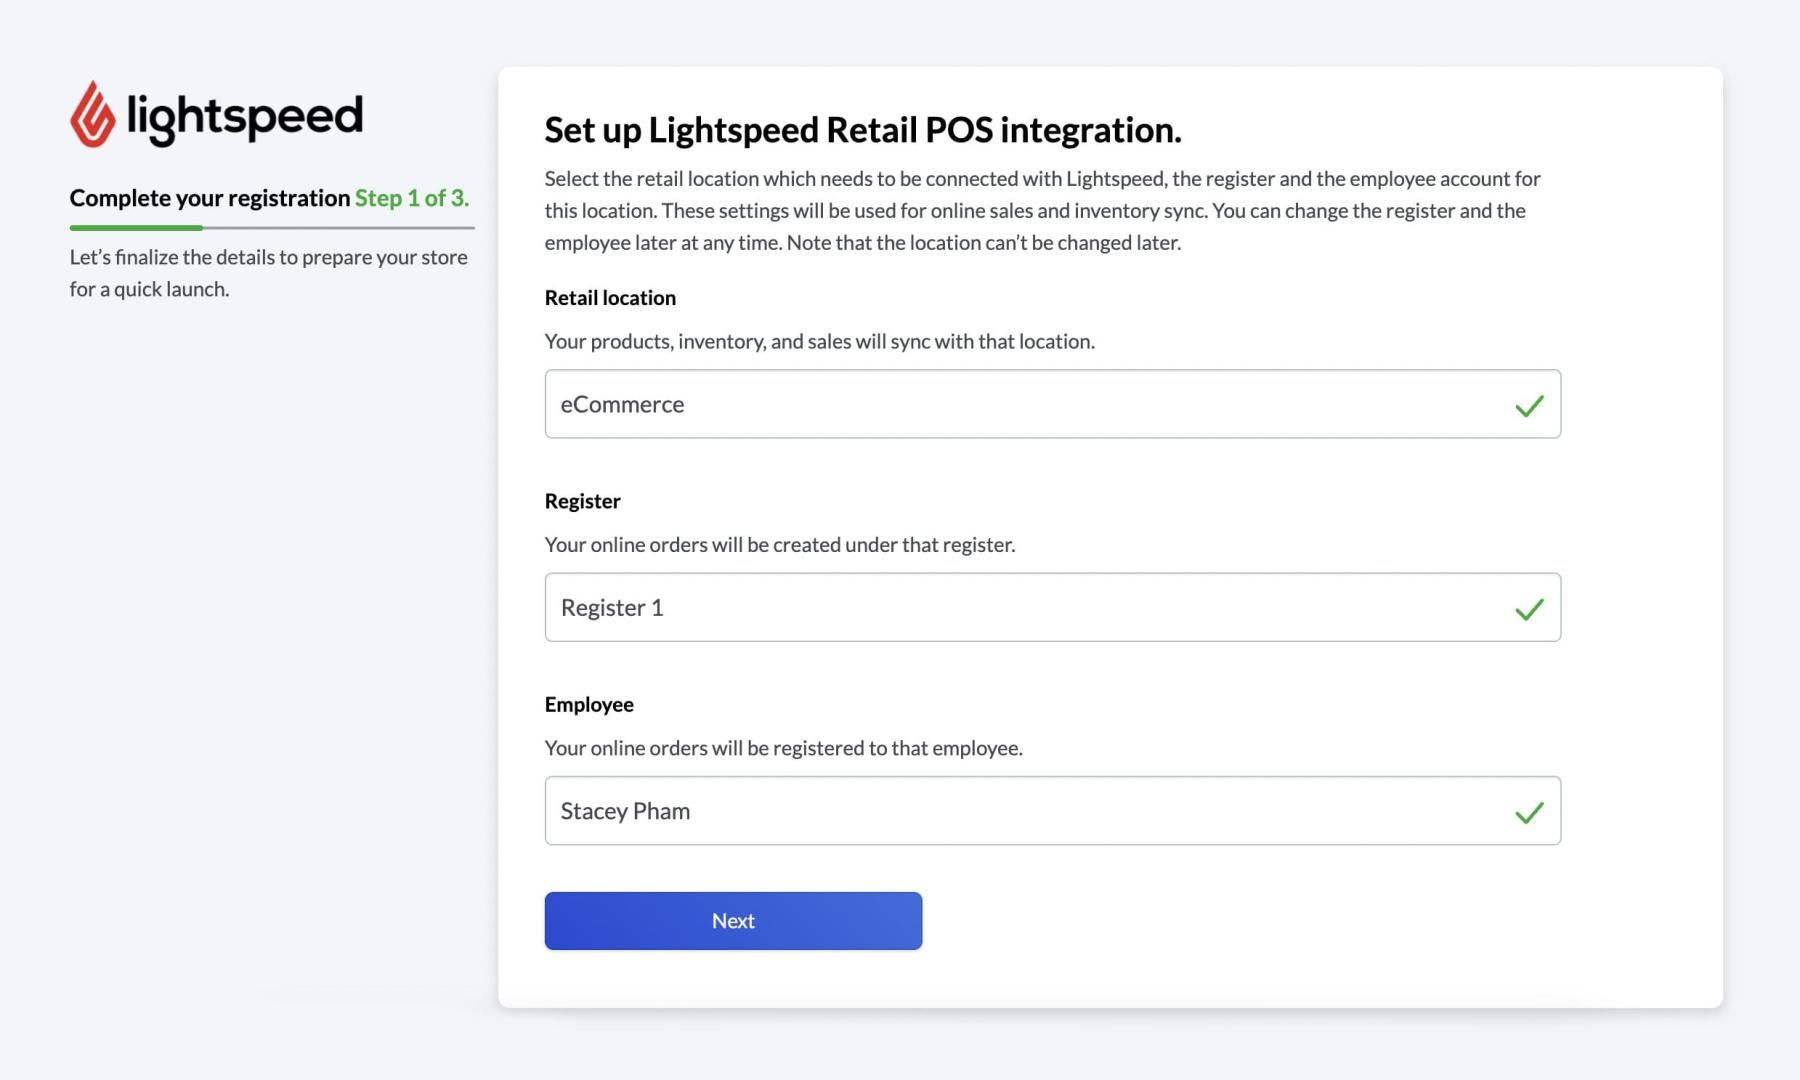 Set up Lightspeed Retail POS integration page